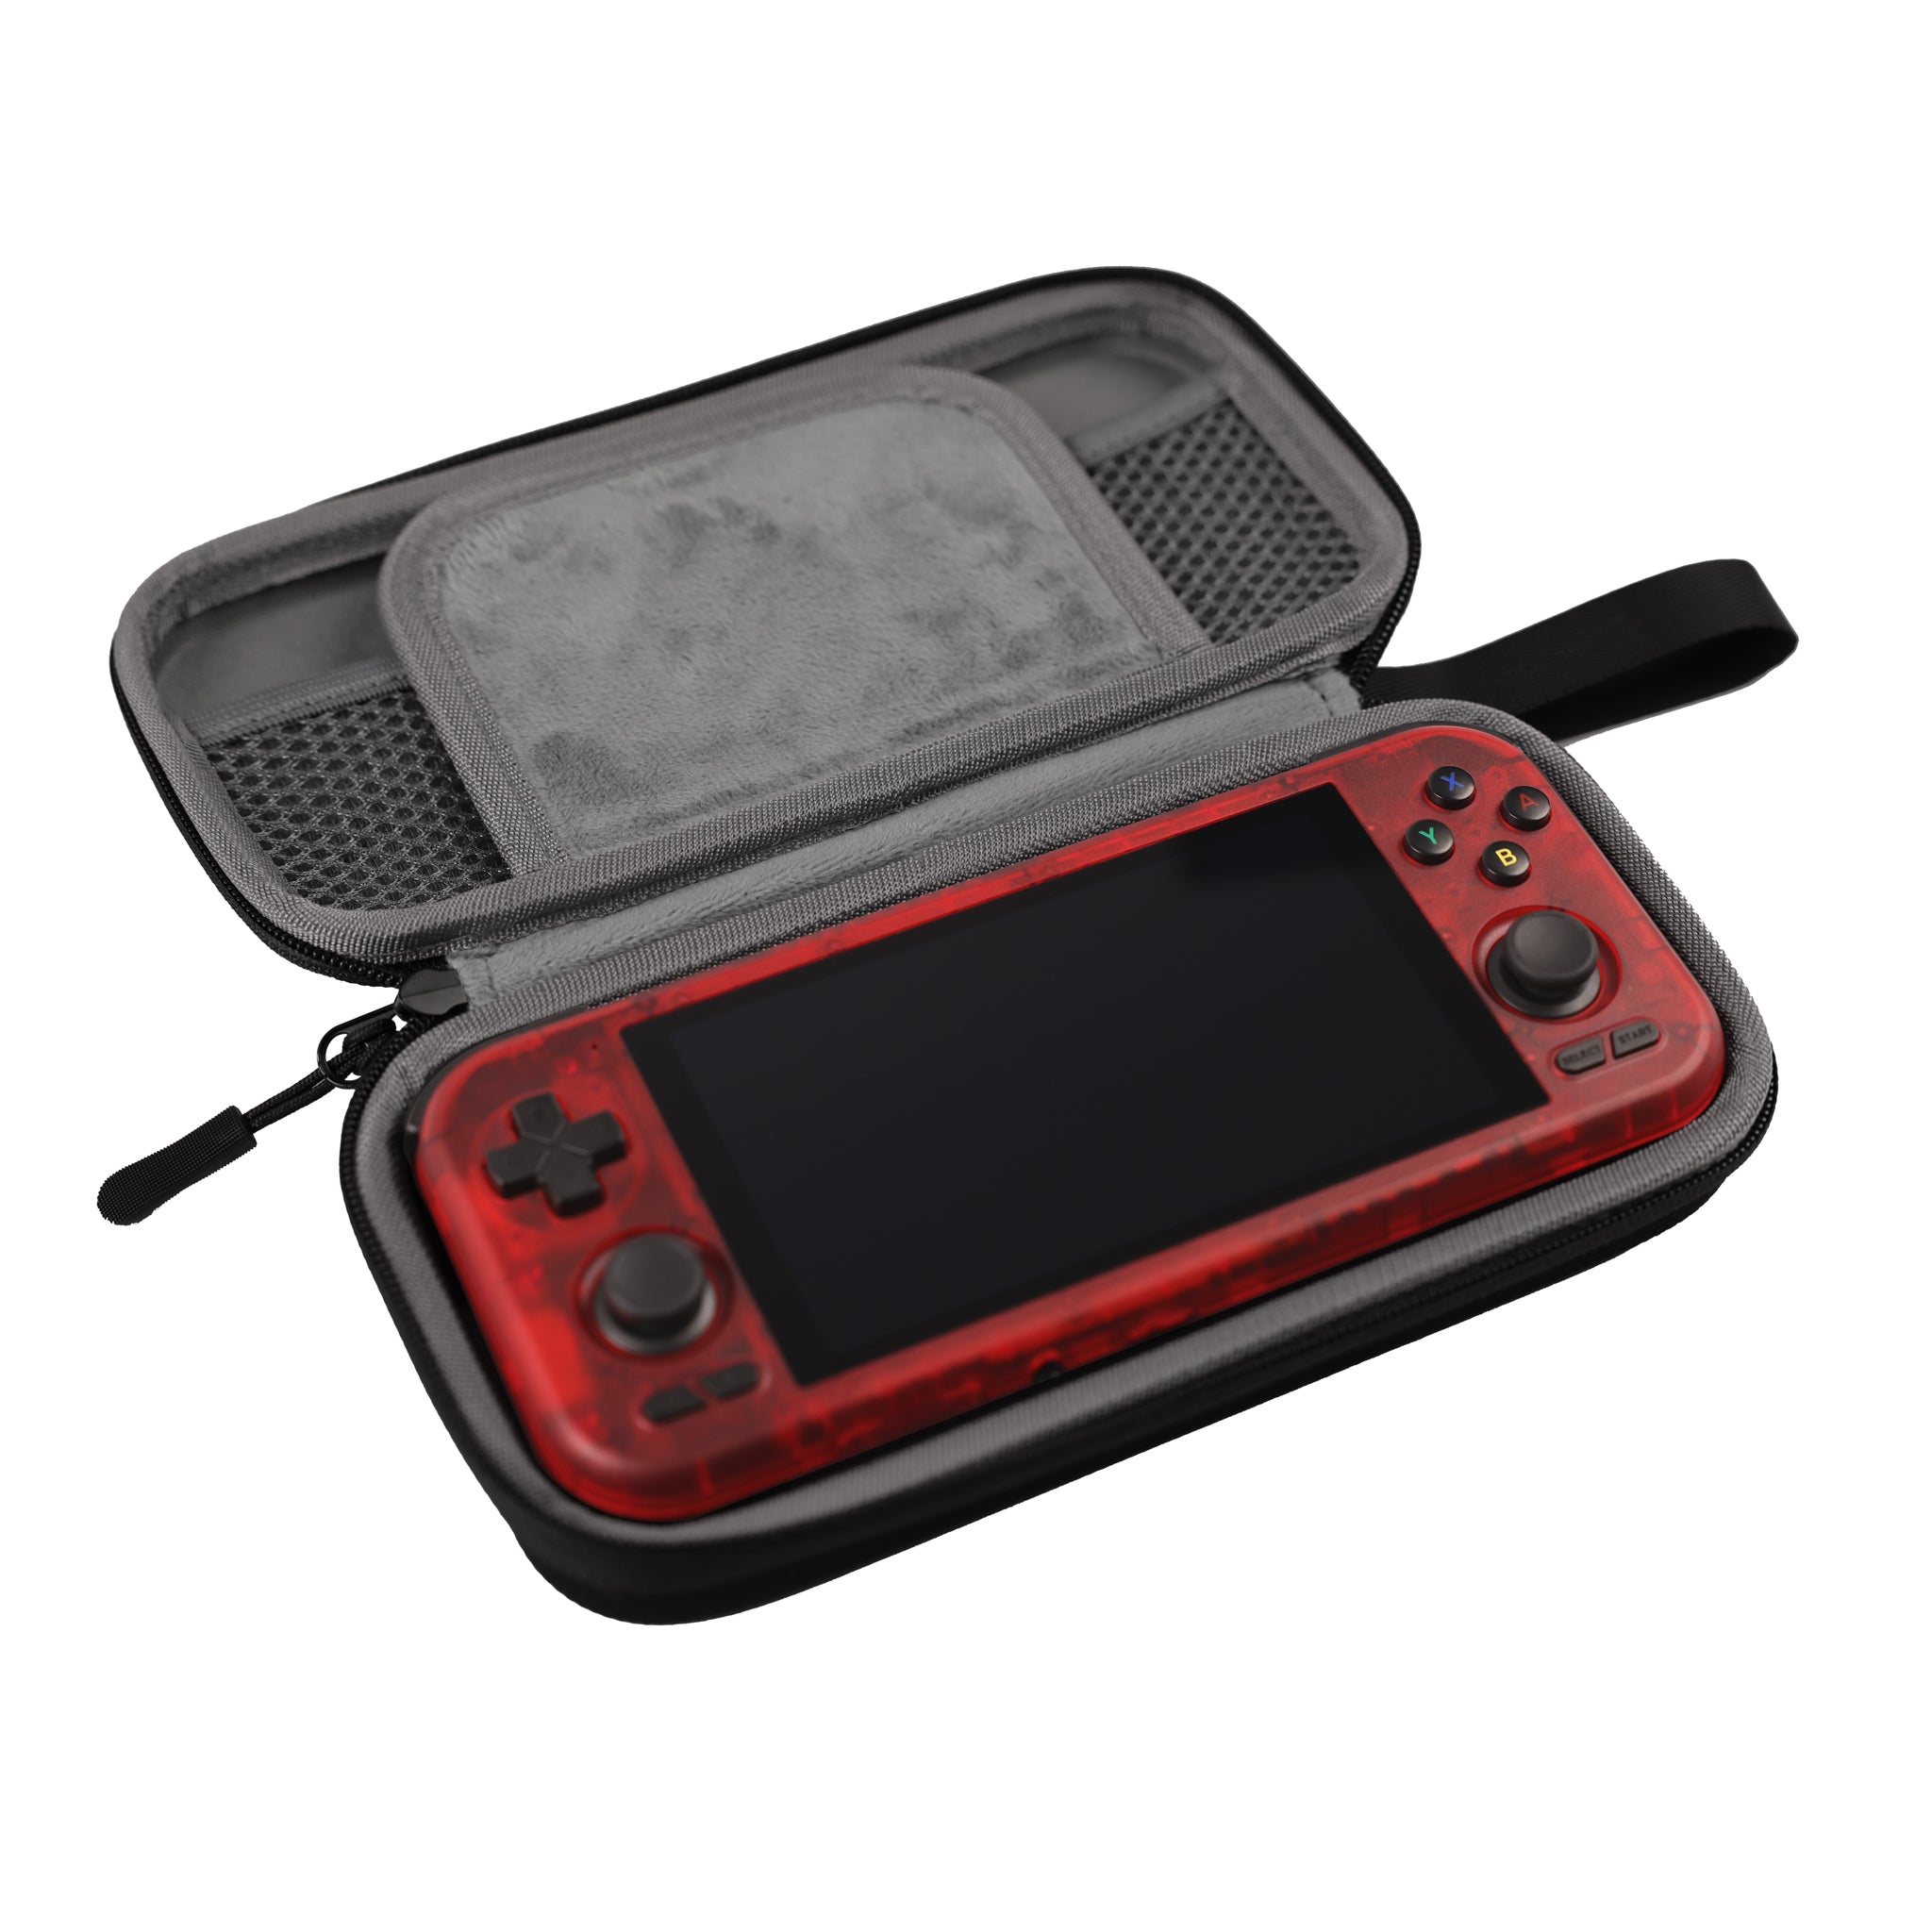 Retroid Pocket 4 Pro ブラック ケース付き - Nintendo Switch